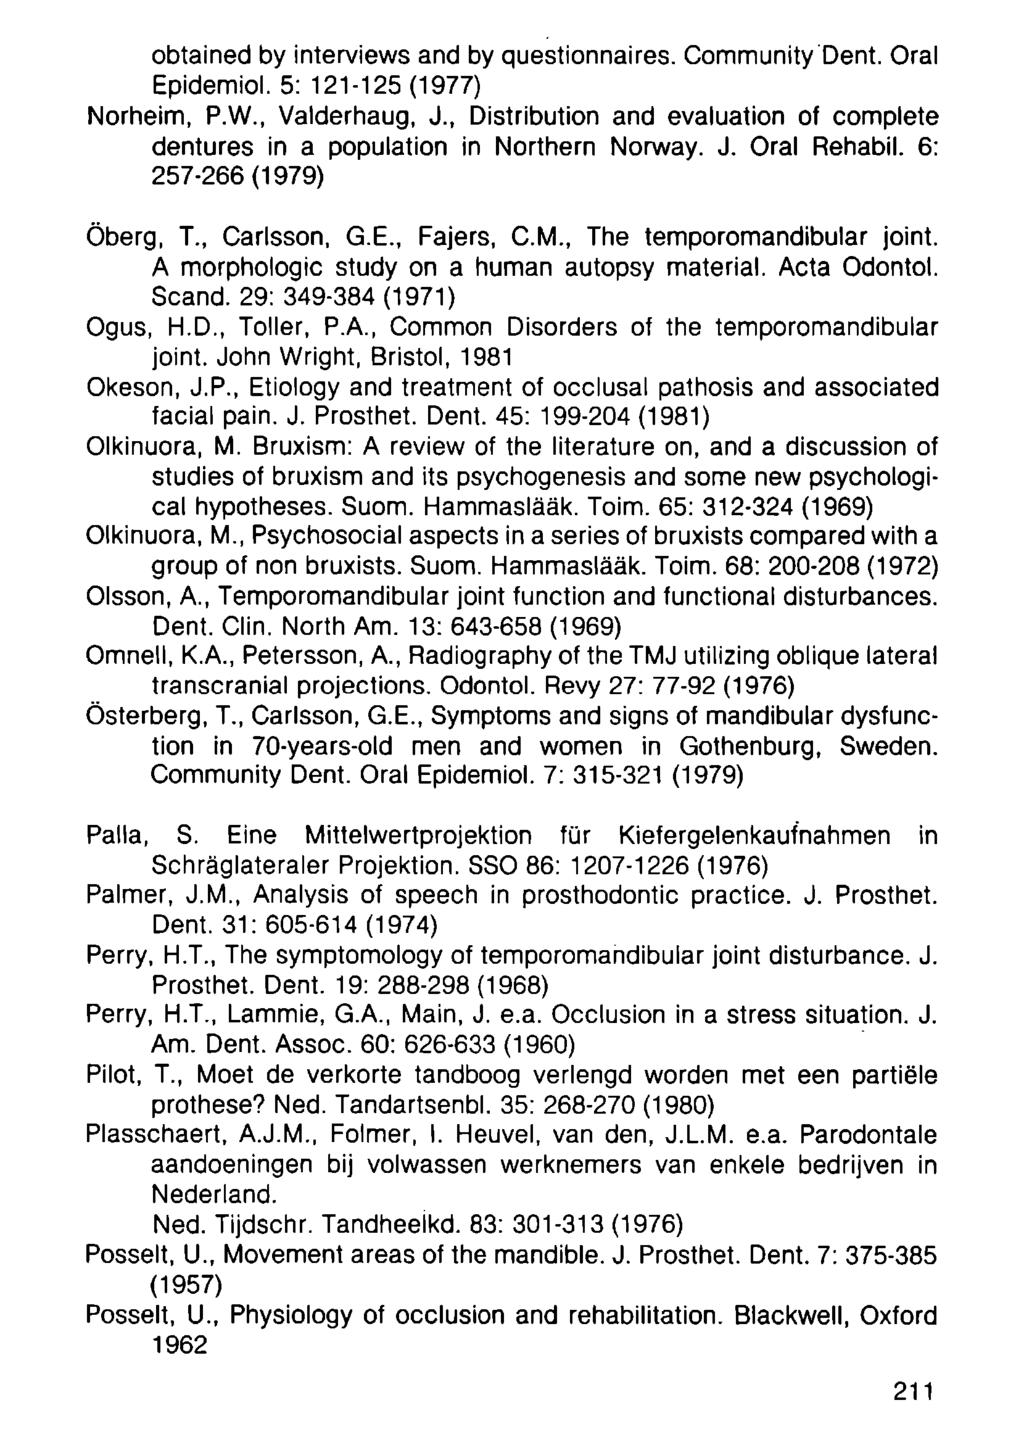 obtained by interviews and by questionnaires. Community Dent. Oral Epidemiol. 5: 121-125(1977) Norheim, P.W., Valderhaug, J.